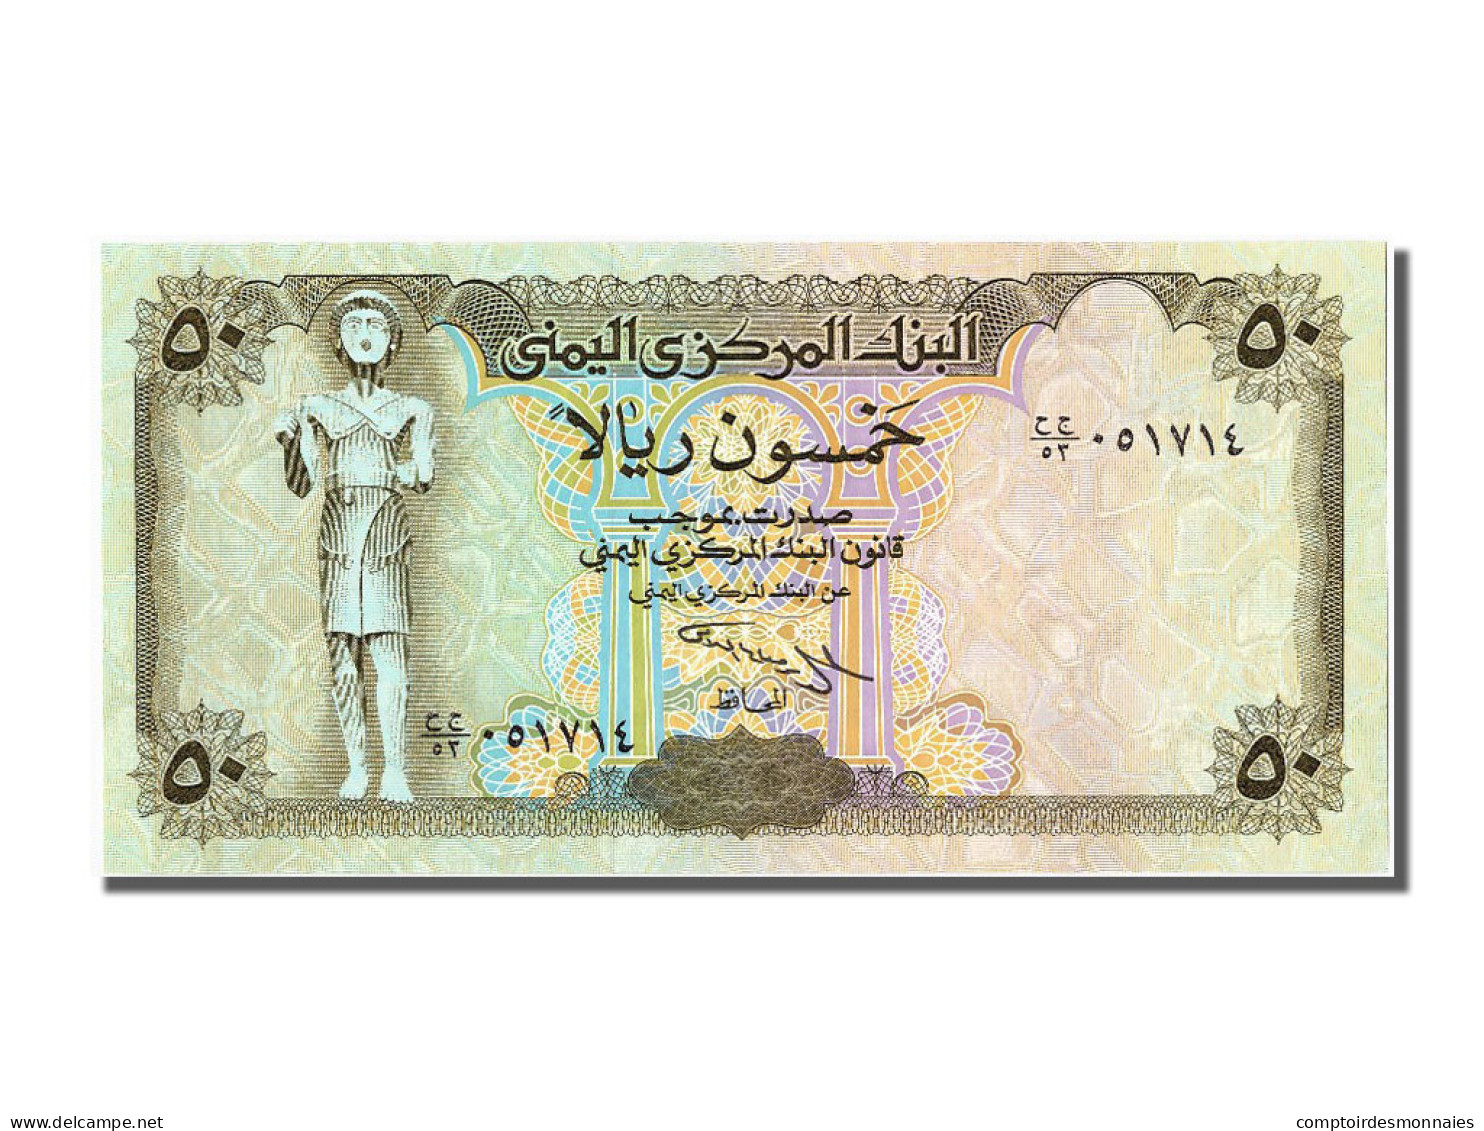 Billet, Yemen Arab Republic, 50 Rials, NEUF - Yémen